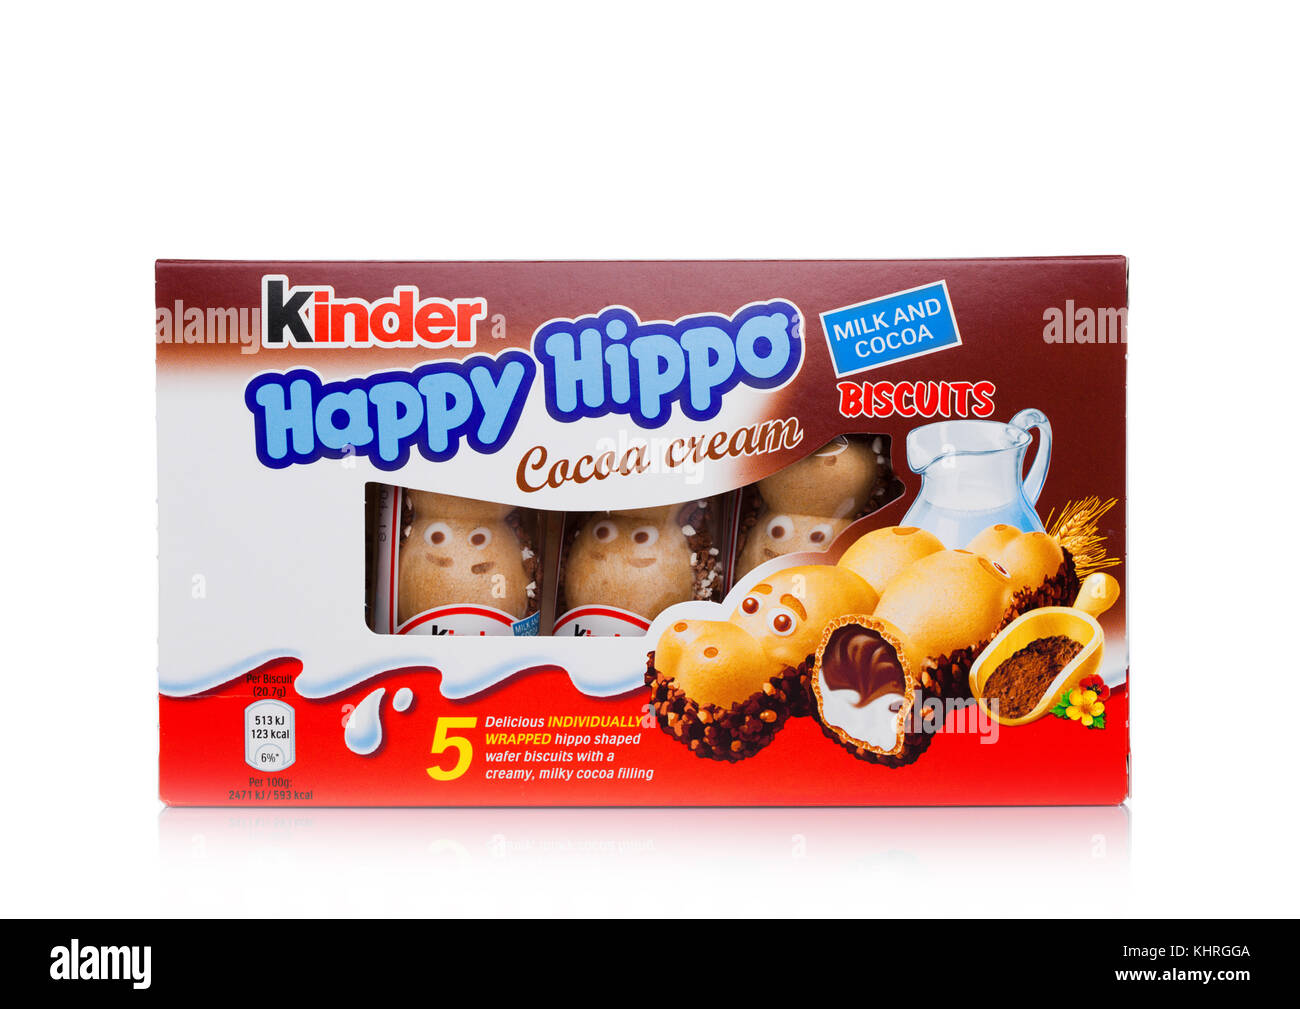 Kinder mini chocolate bar hi-res stock photography and images - Alamy